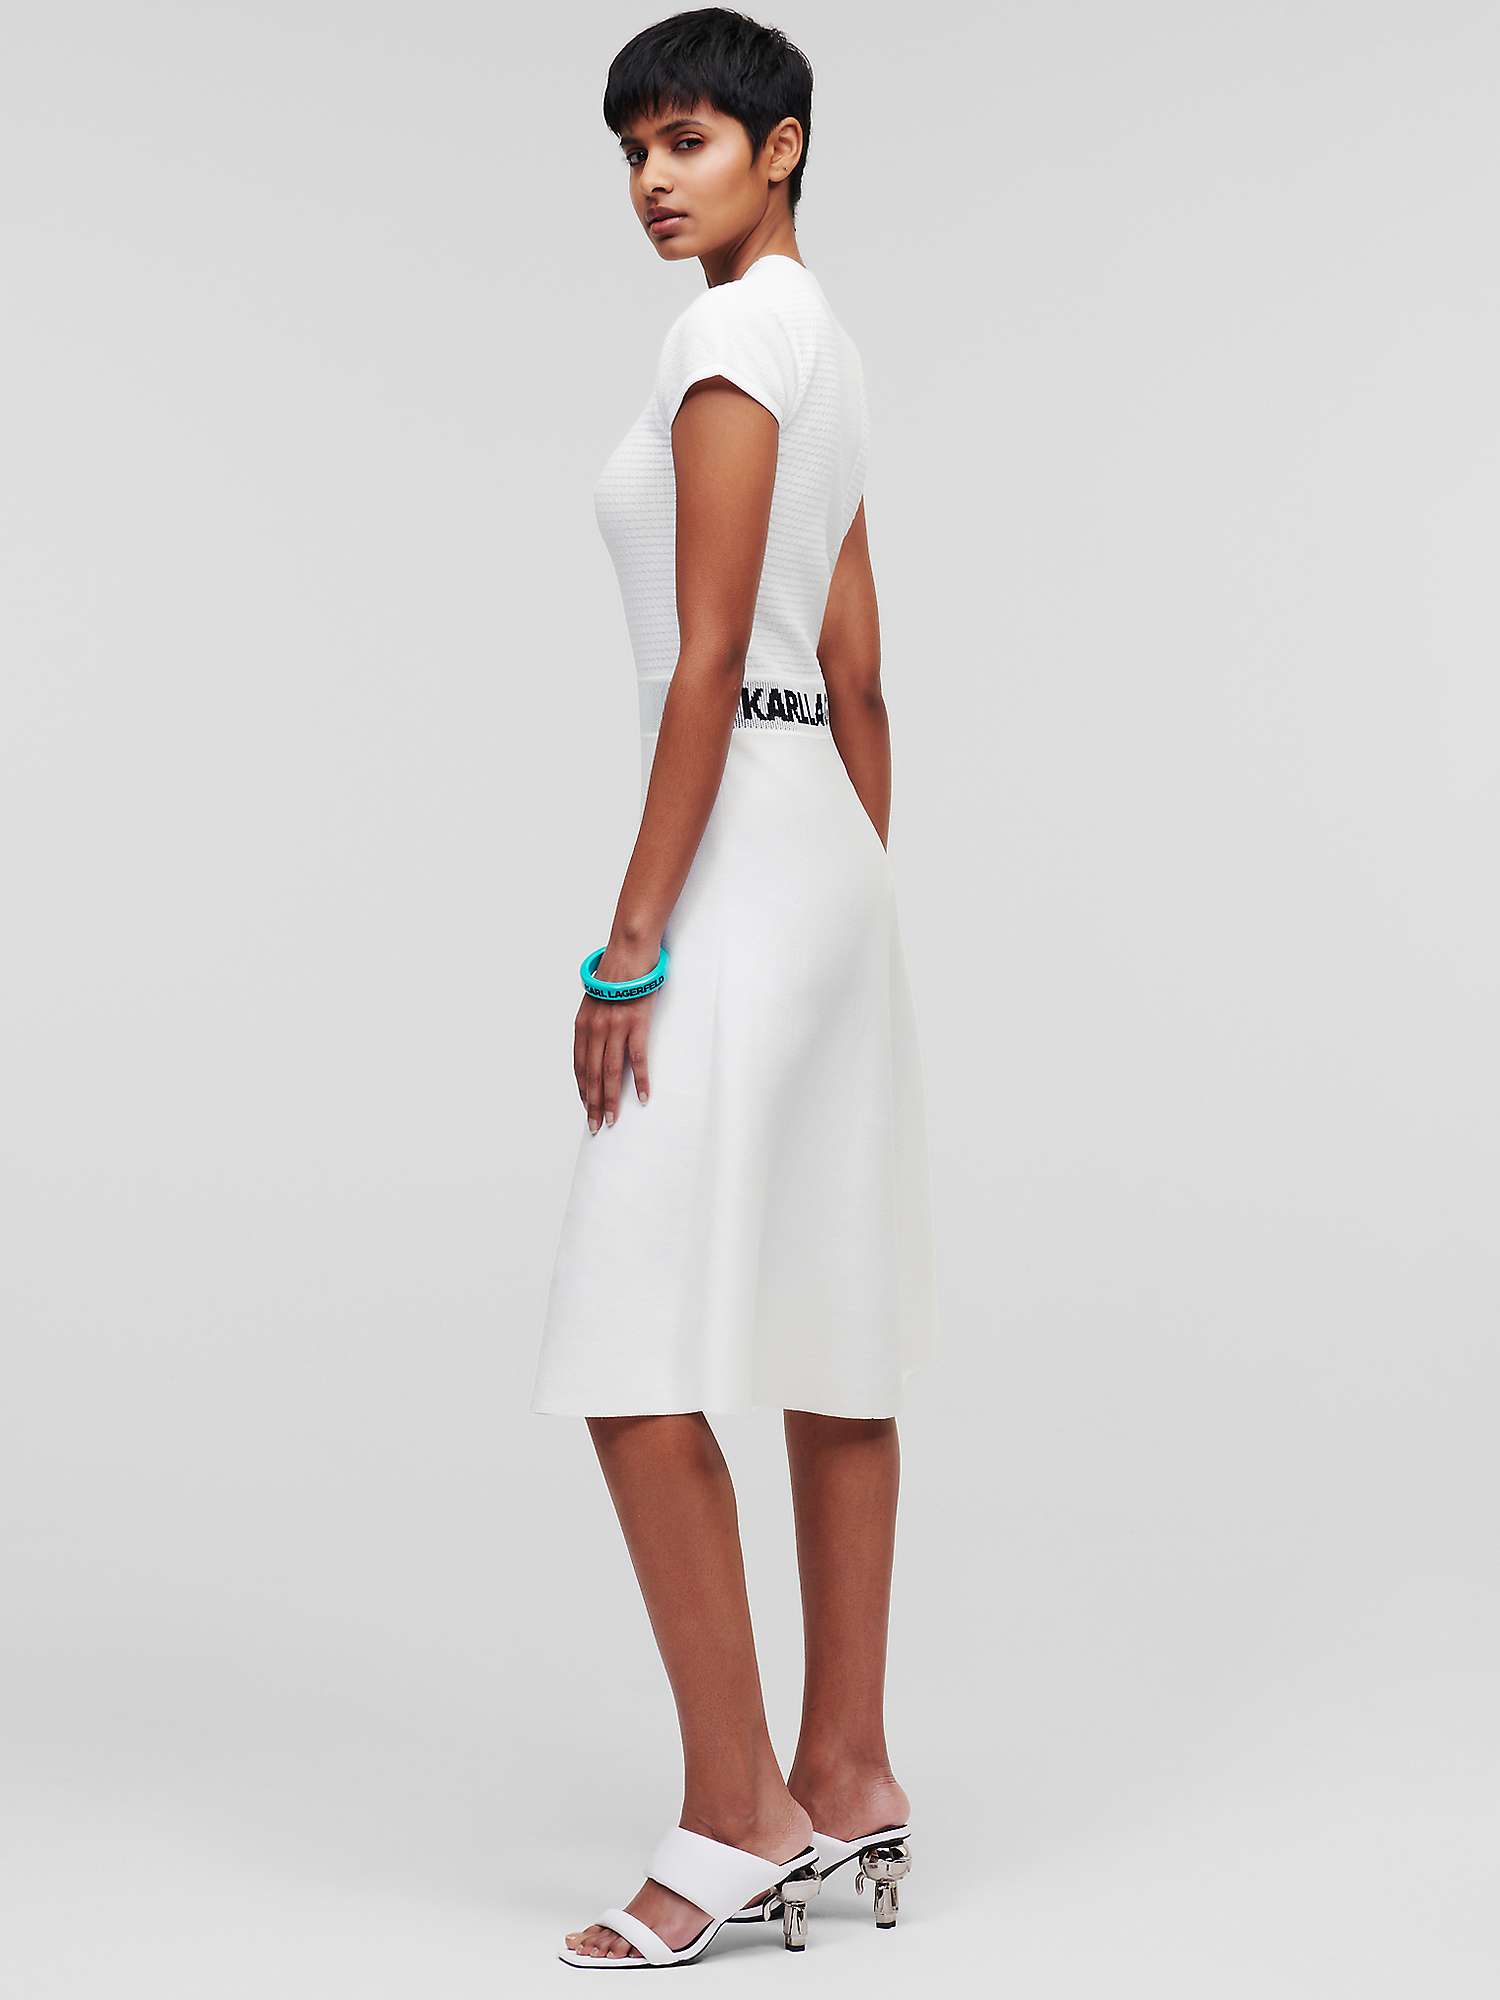 KARL LAGERFELD Knit Dress, White/Black at John Lewis & Partners